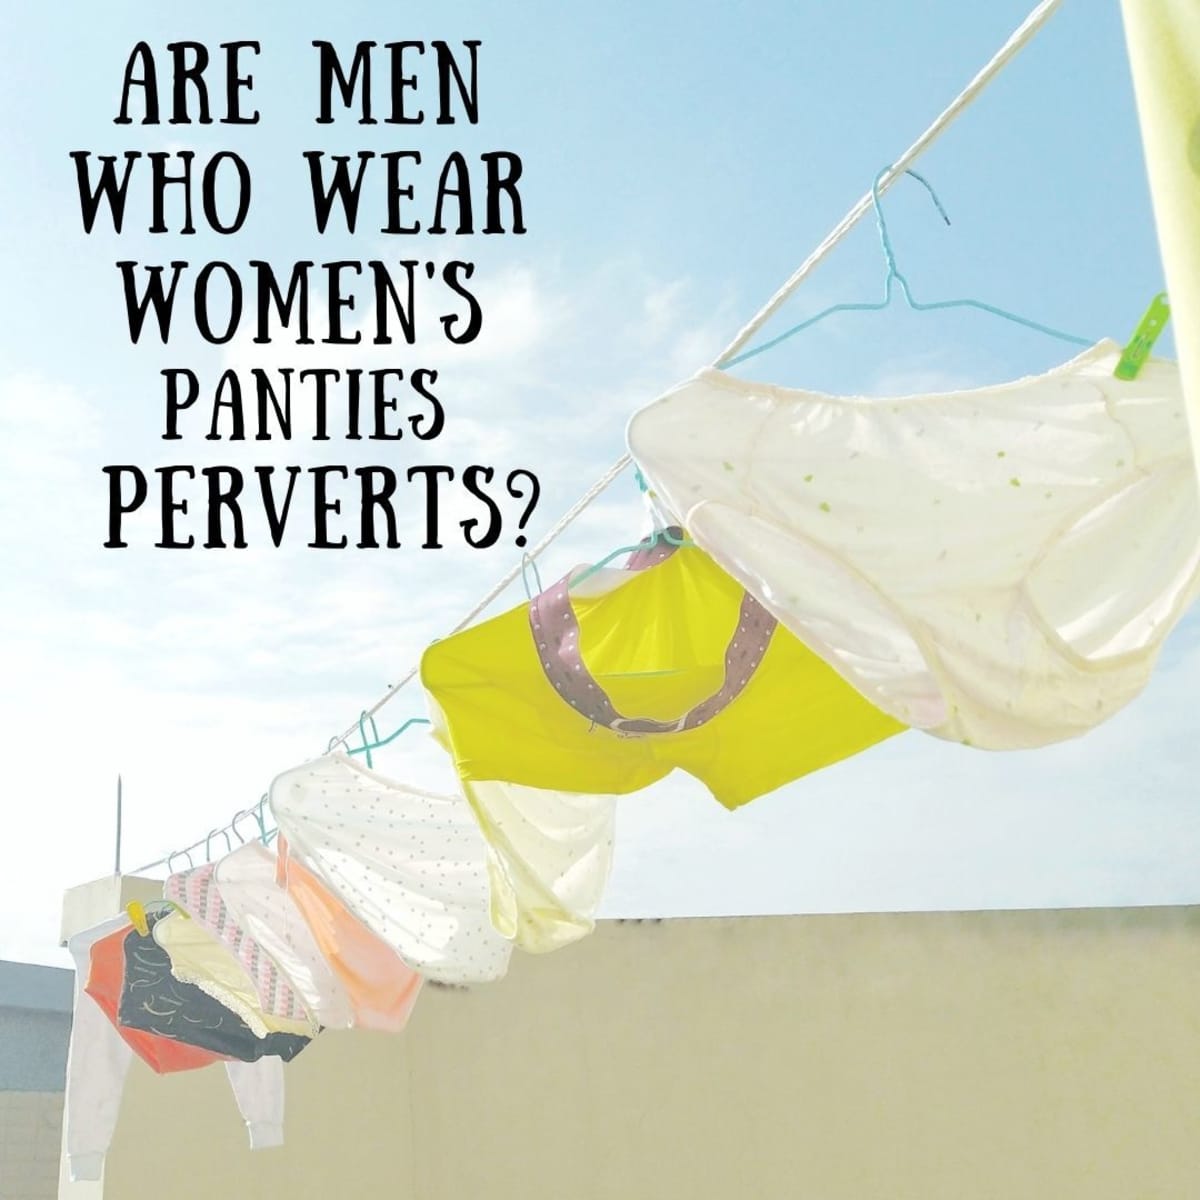 Straight men wearing panties